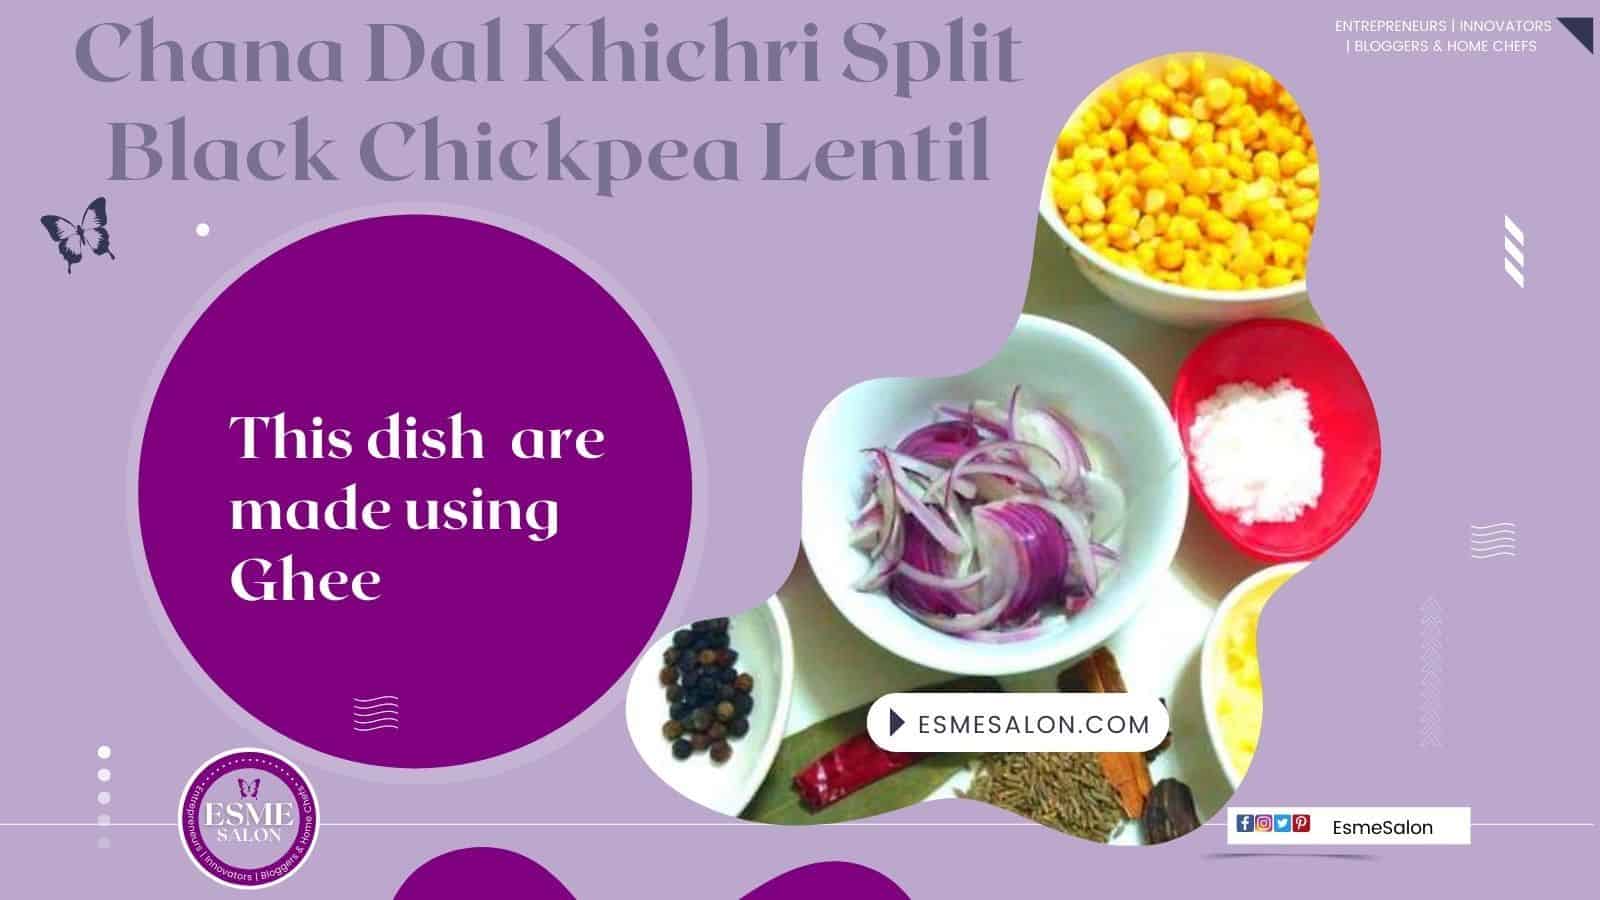 Chana Dal Khichri Split Black Chickpea Lentil with Gee